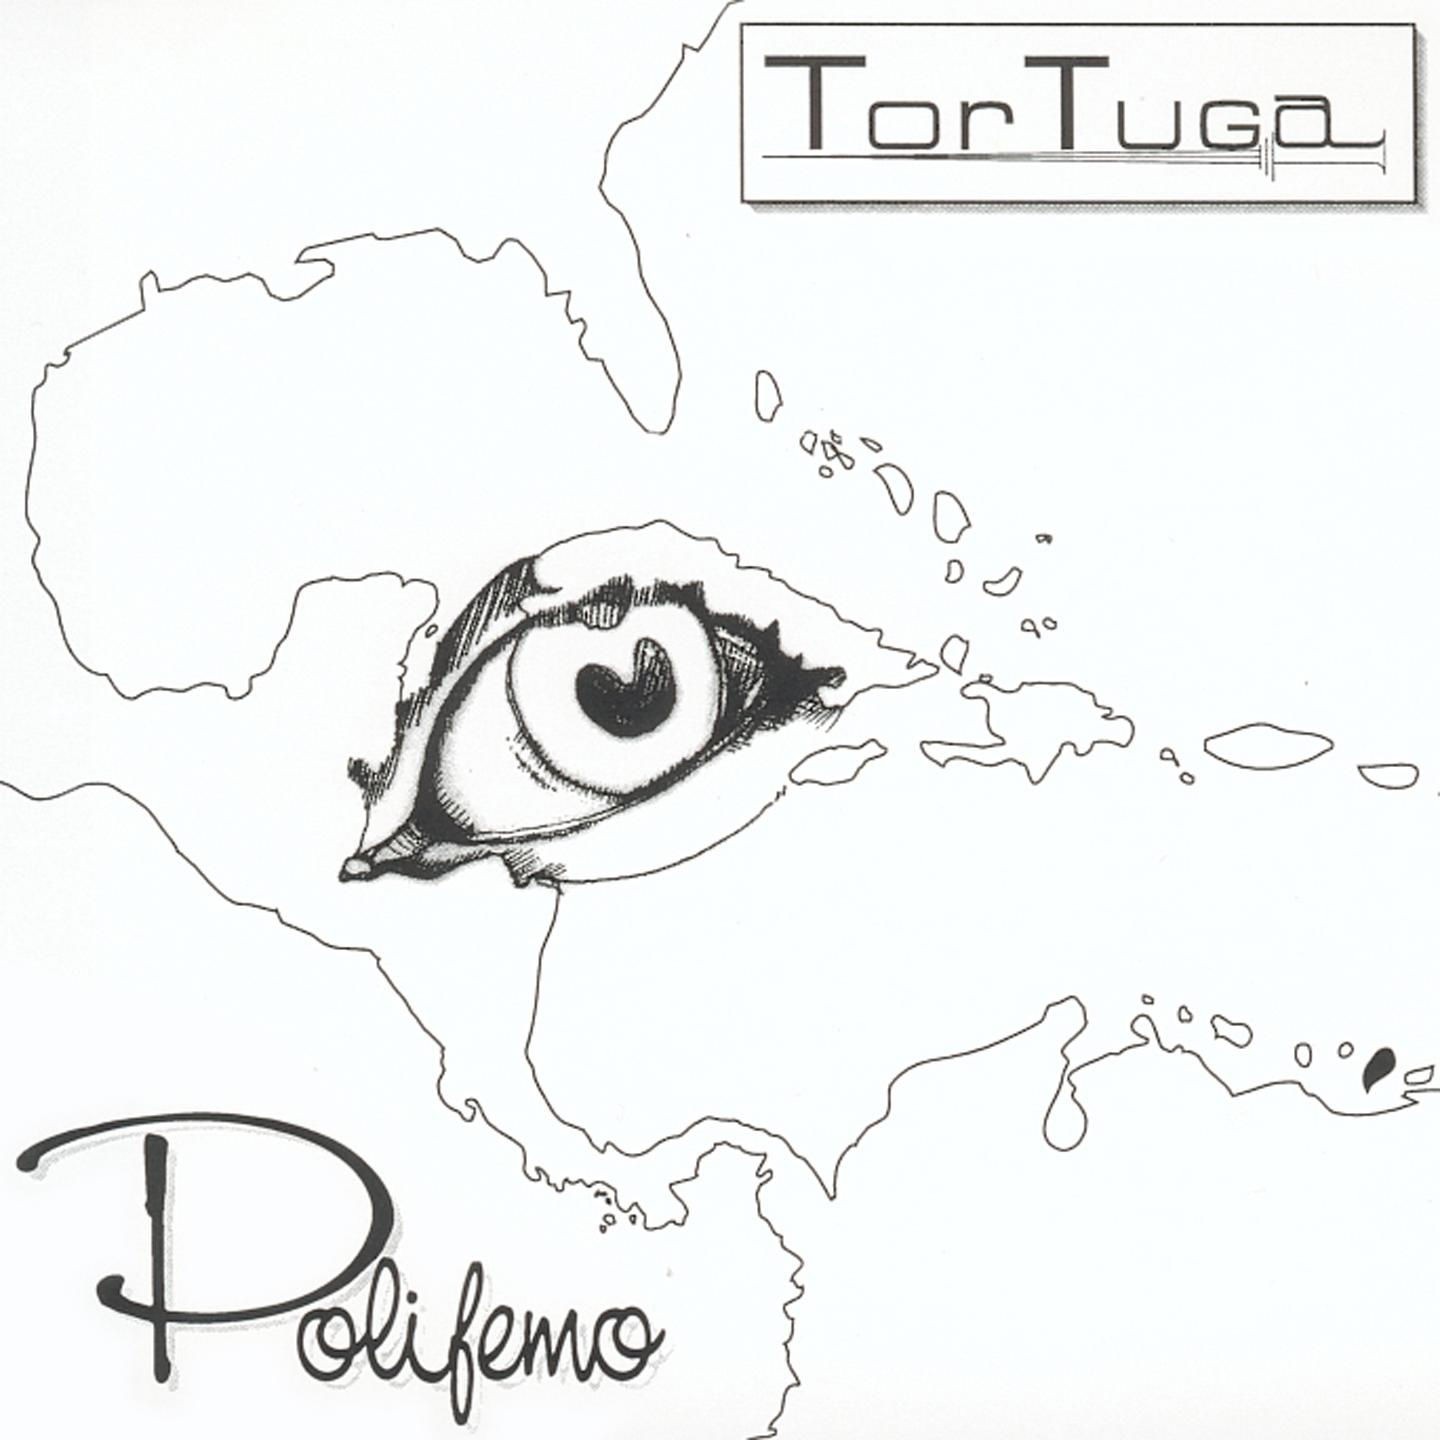 TORTUGA - POLIFEMO